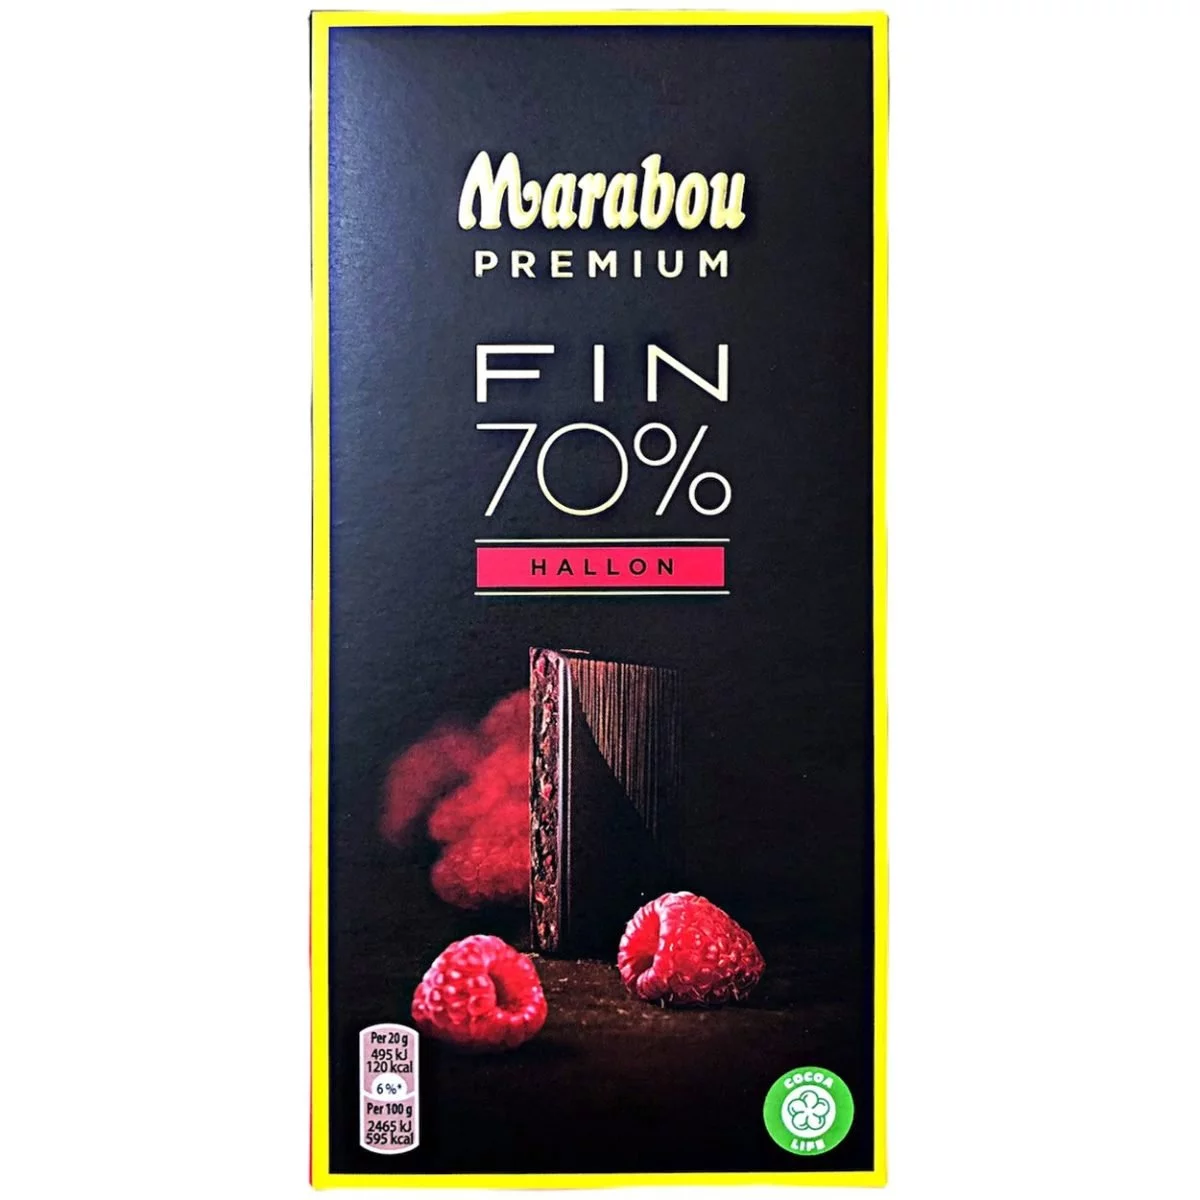 Marabou Premium FIN 70% Hallon (100g) 1